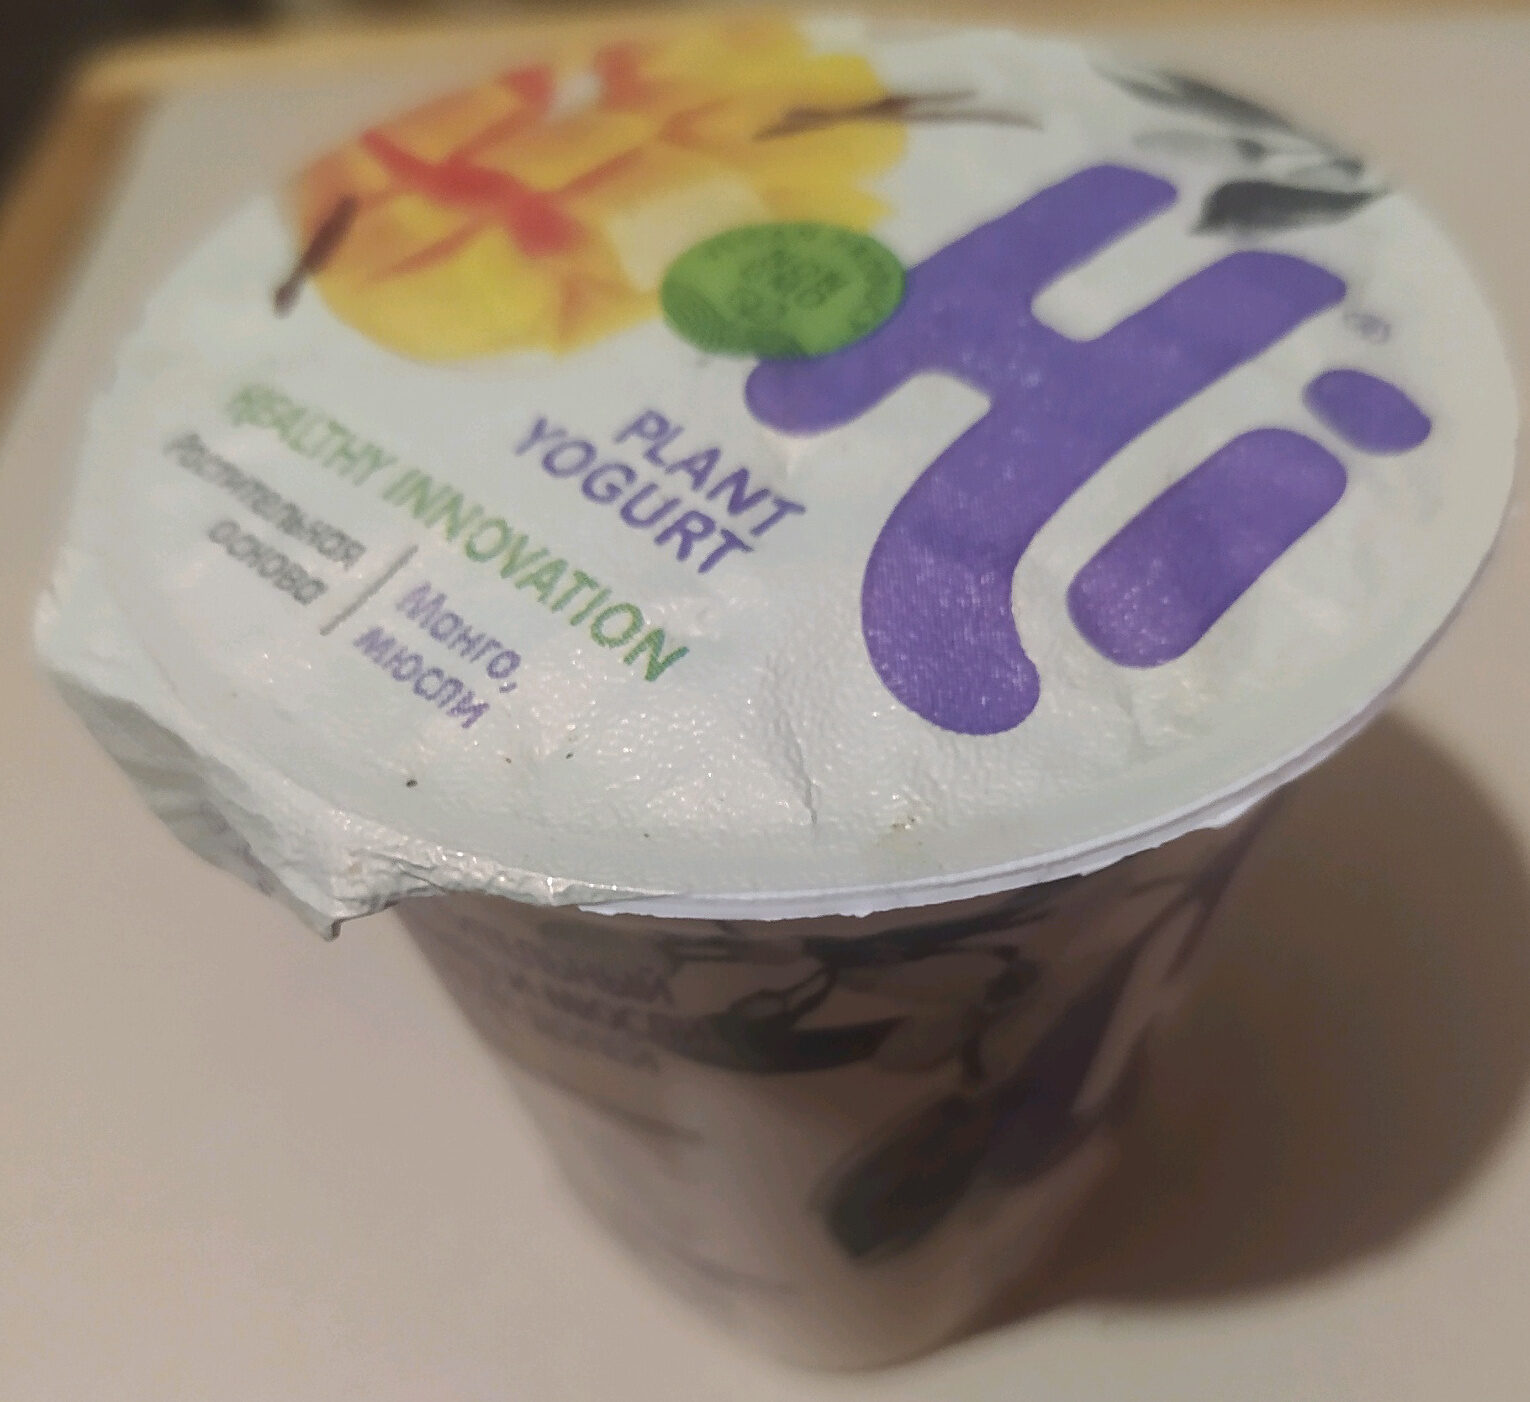 Plant yogurt манго, мюсли - Produkt - ru